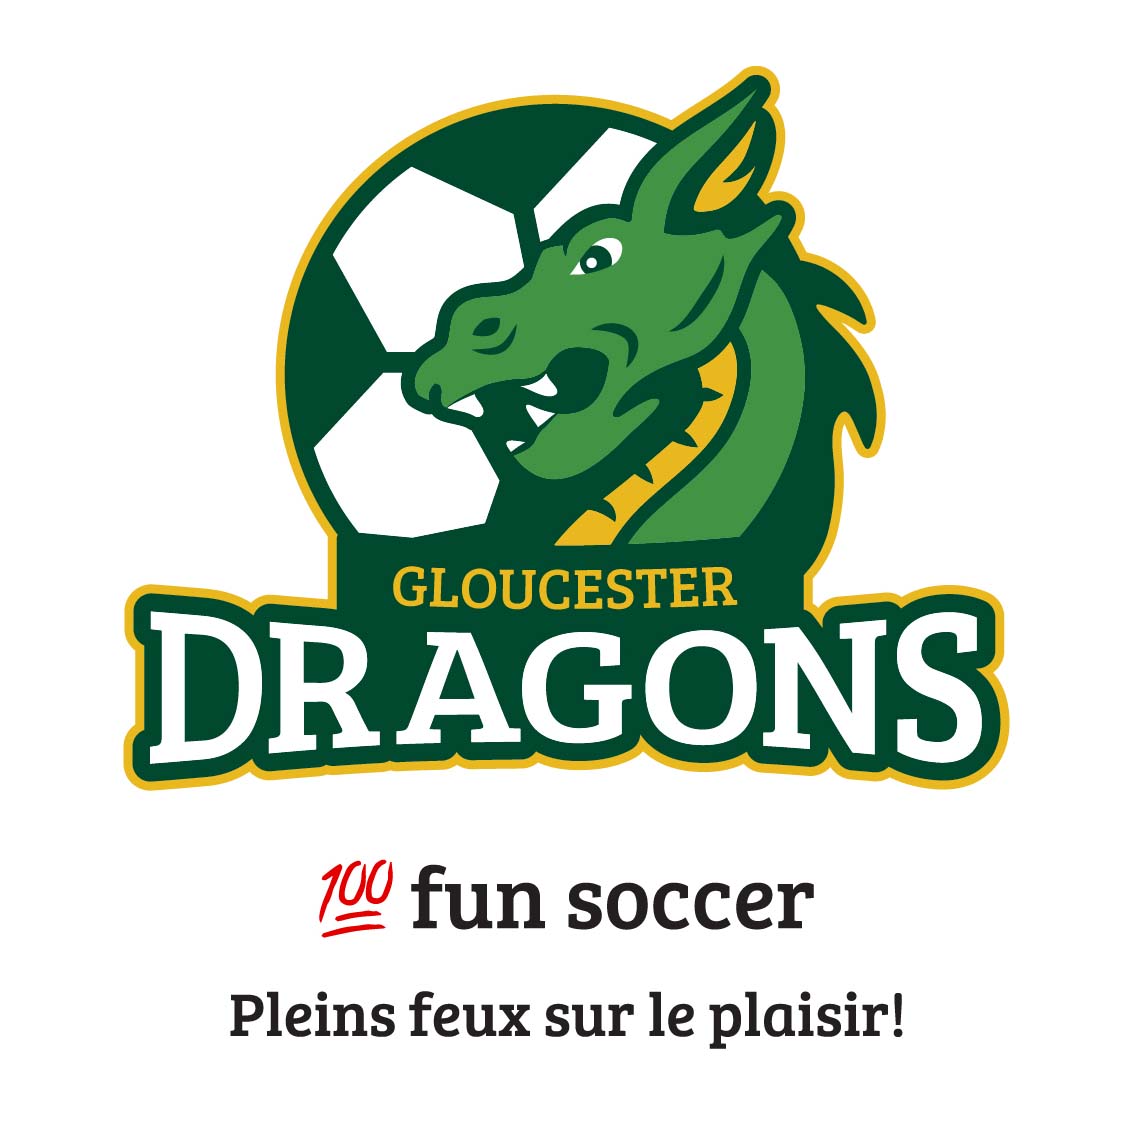 Gloucester Dragons Recreational Soccer Club